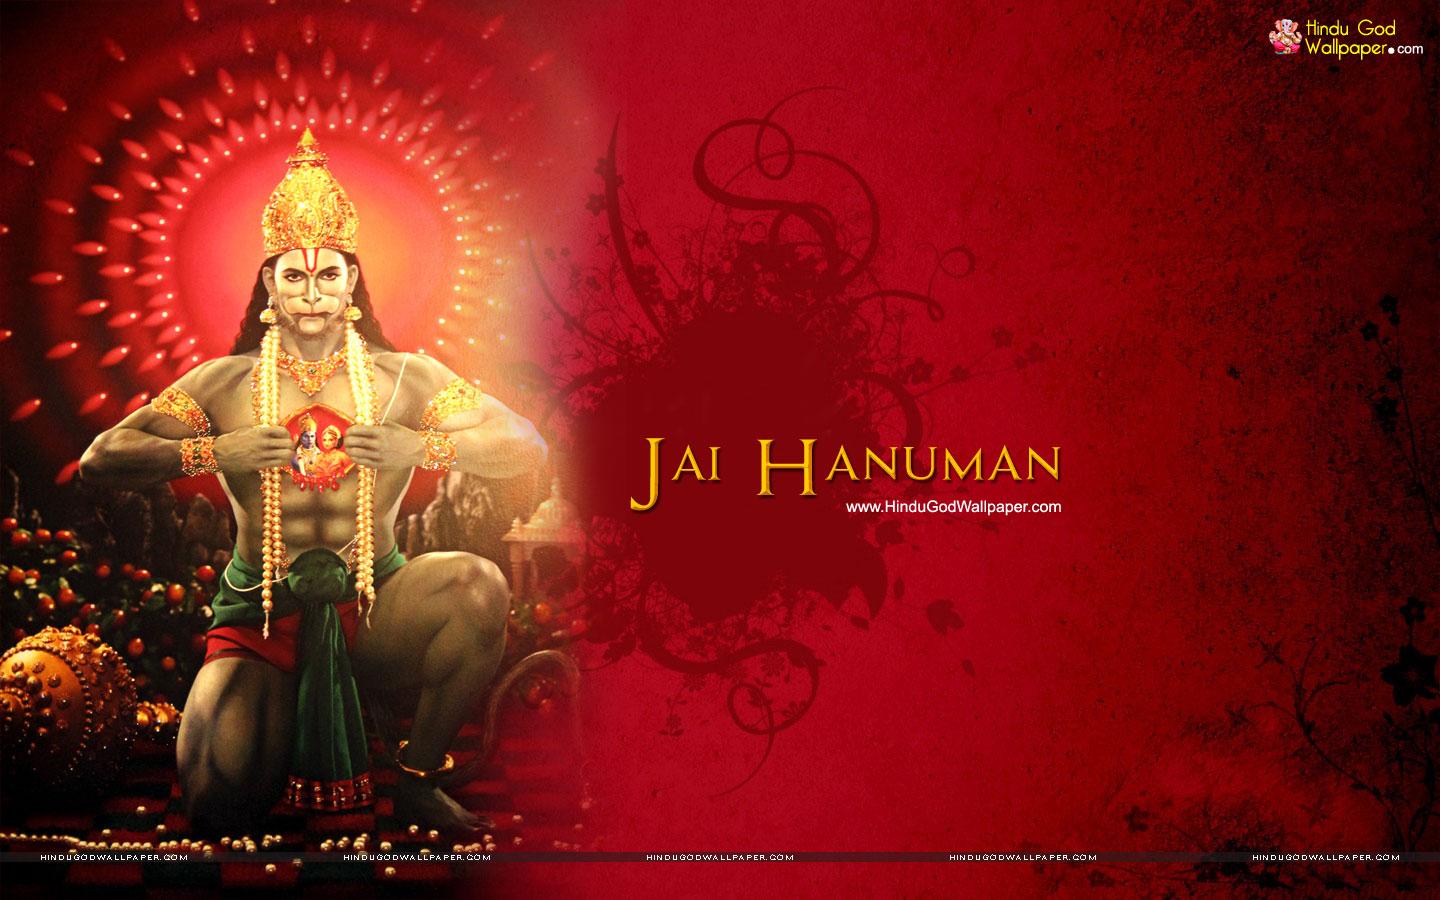 Angry Hanuman Photo, Image, Pics and Wallpaper